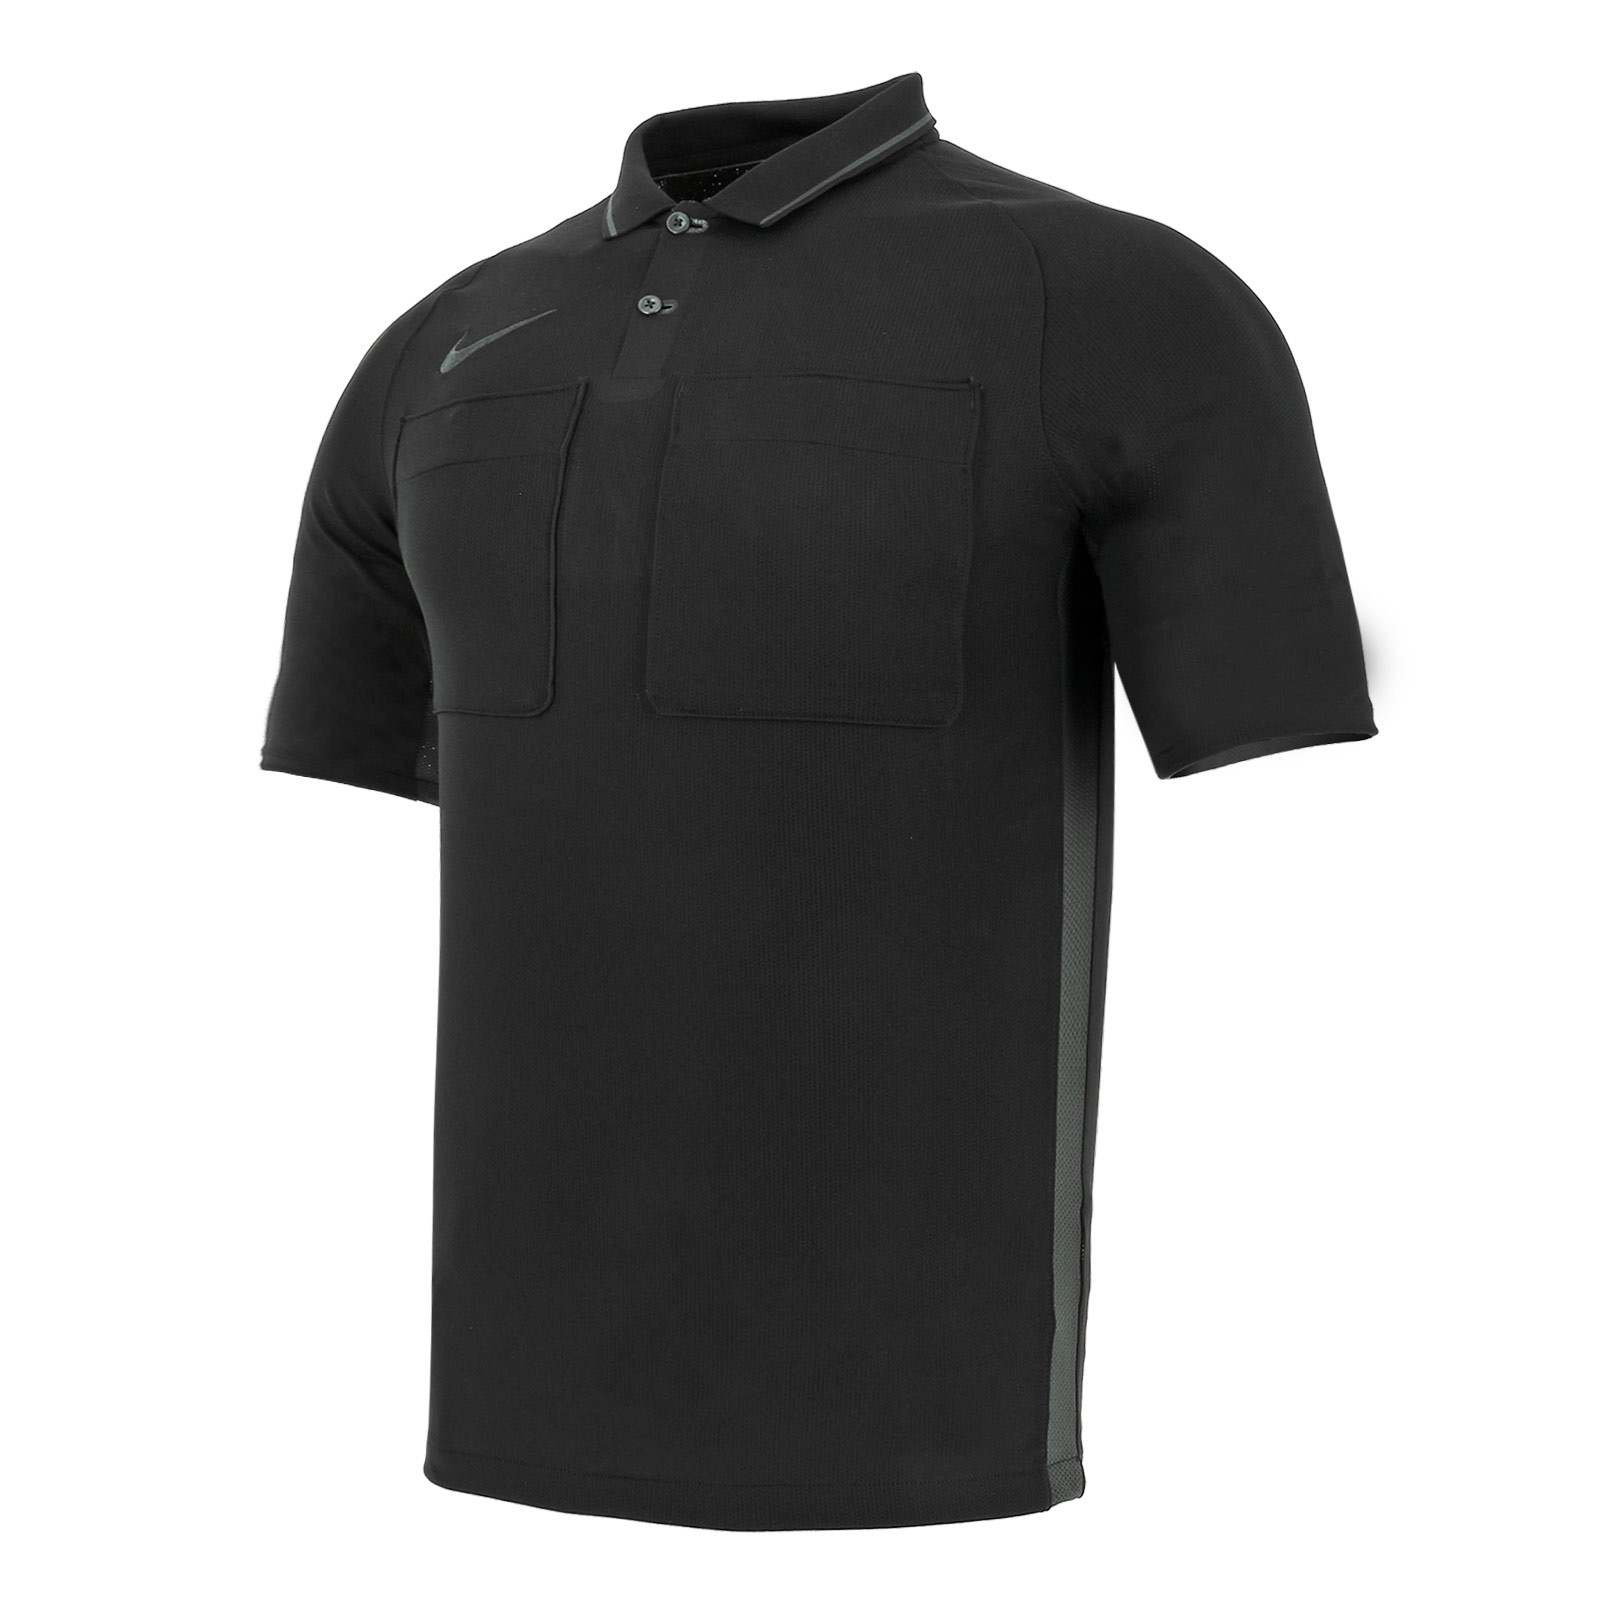 Soldado Ambiente Me preparé Camiseta árbitro Nike Referee negra | futbolmania